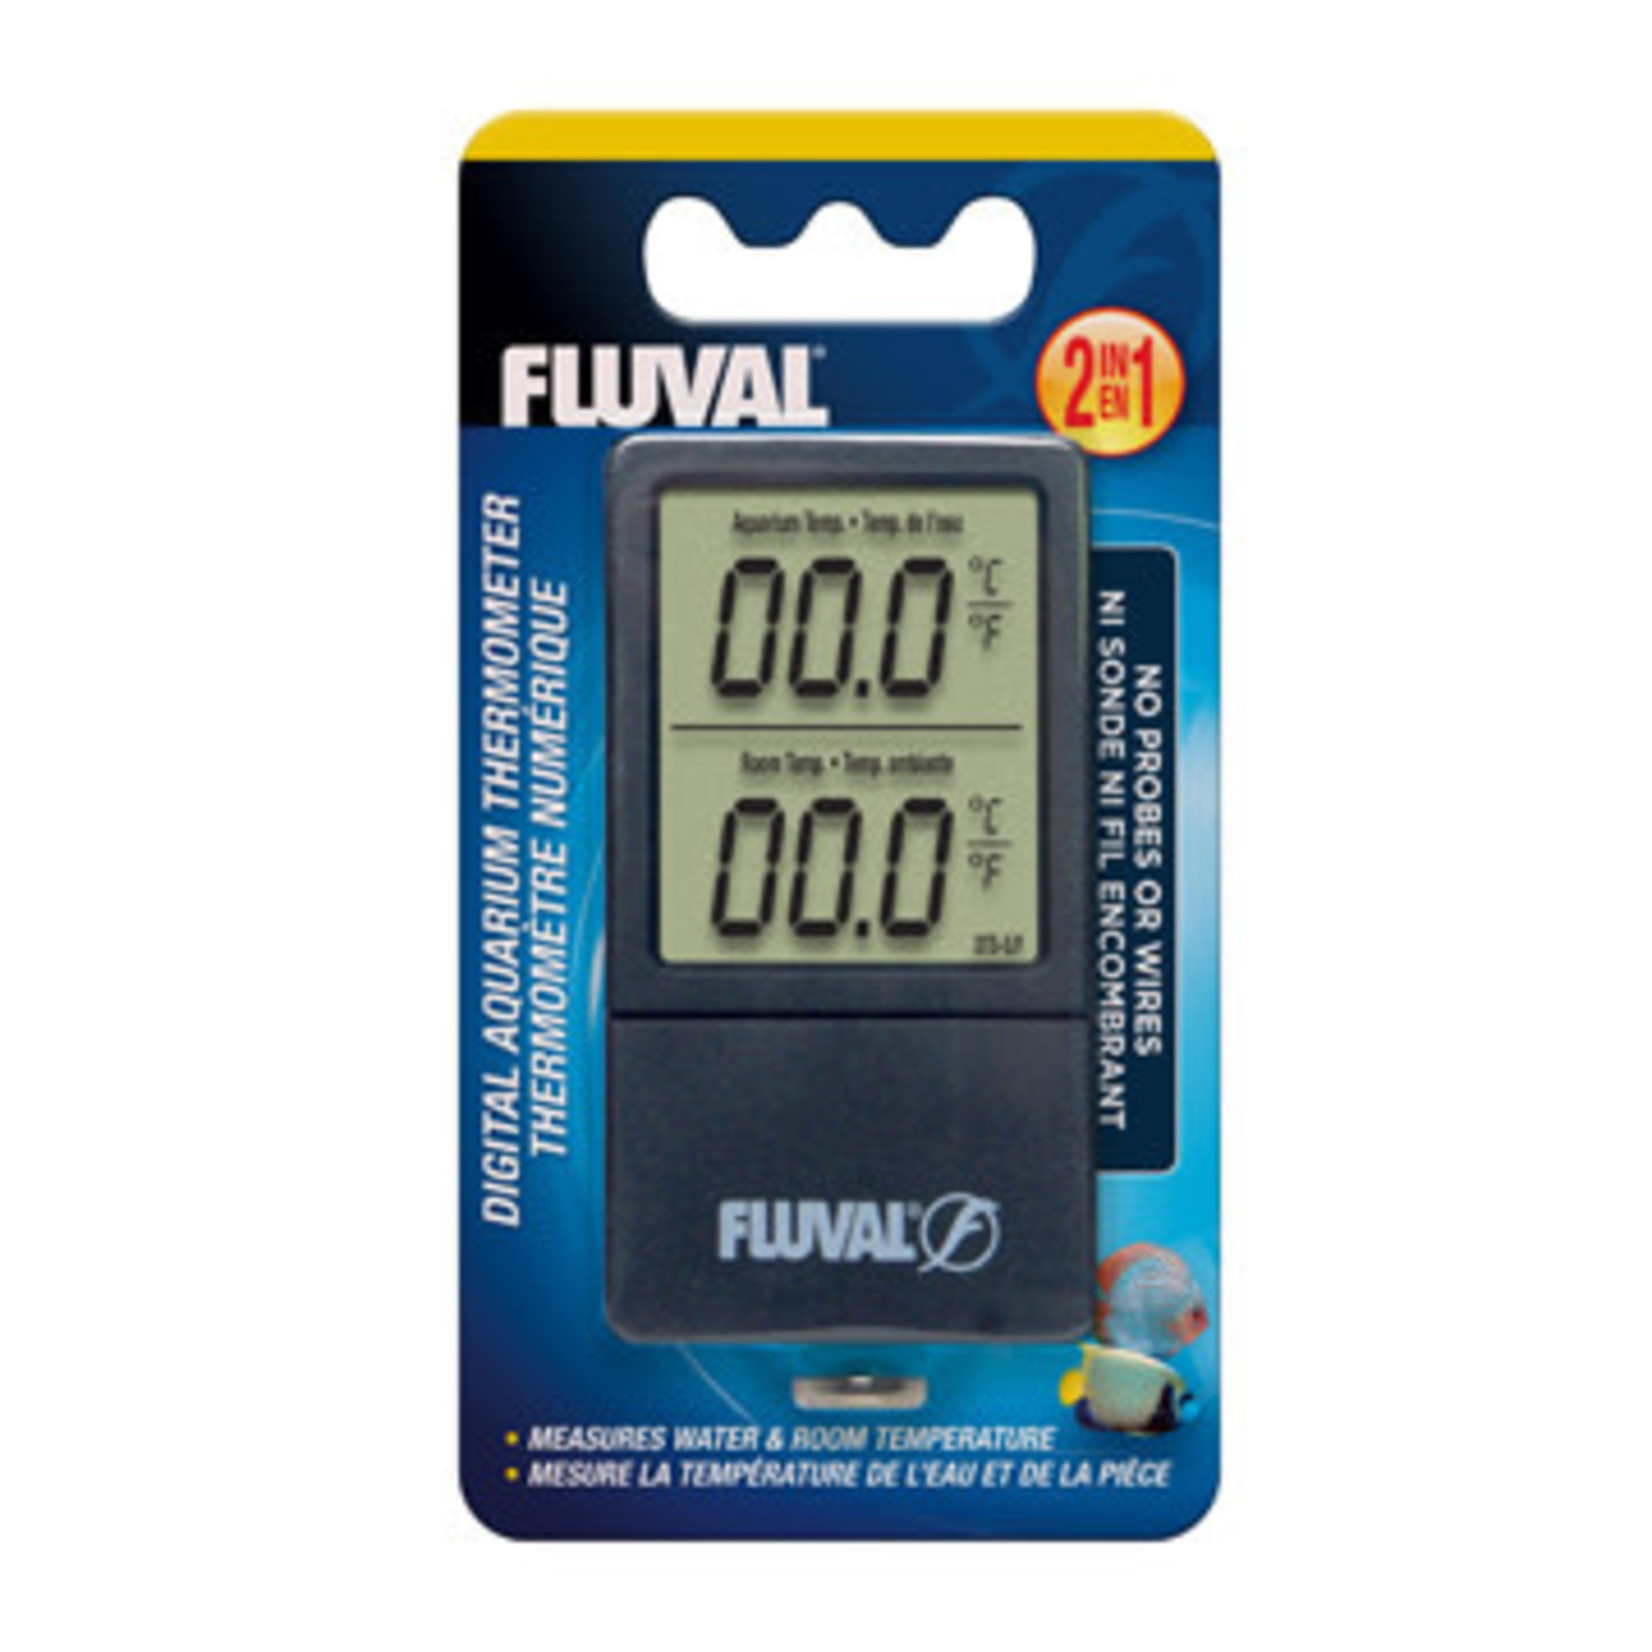 Fluval Fluval Wireless 2-in-1 Digital Thermometer